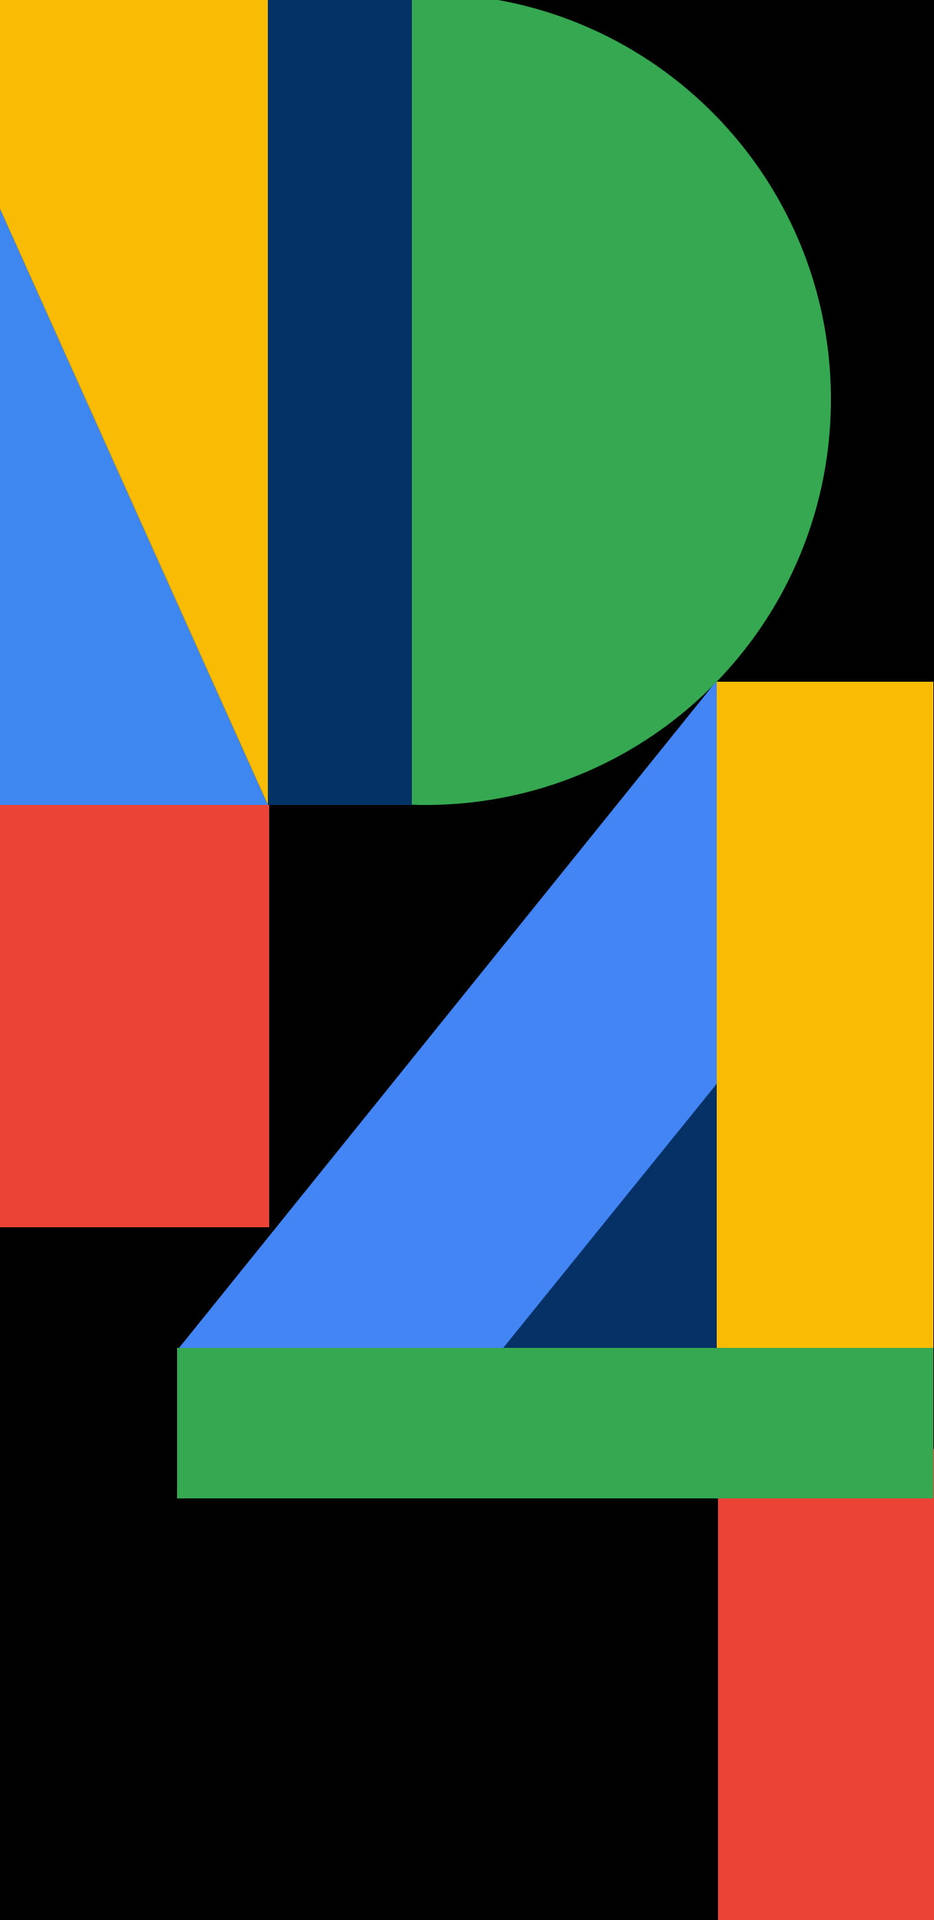 P4wortgrafik Google Pixel 4 Wallpaper